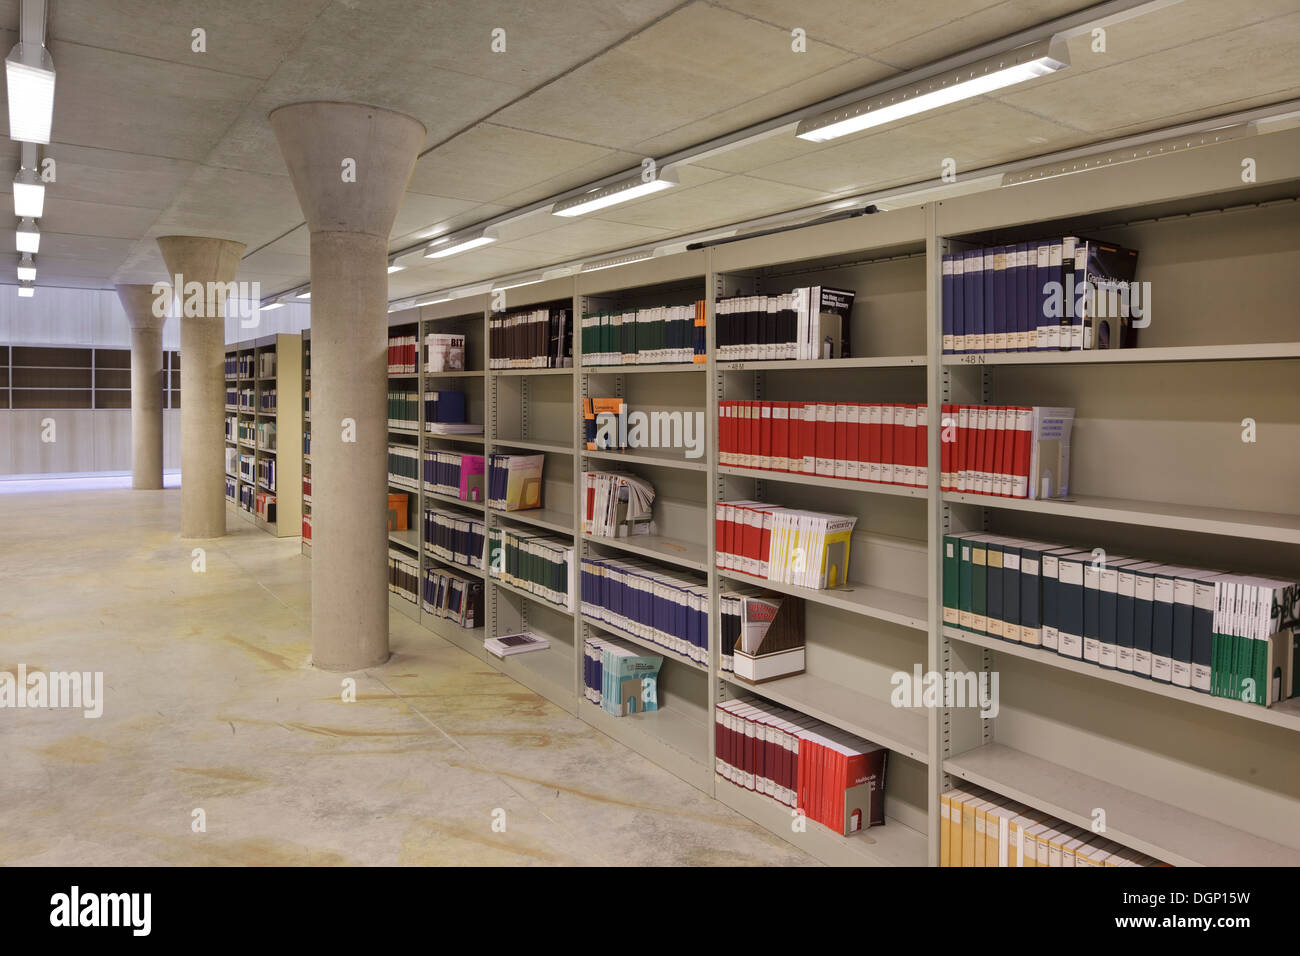 Universidad Católica de Lovaina Arenberg, biblioteca de Lovaina, Bélgica. Arquitecto: Rafael Moneo, 2002. Estantes de libros sobre tierra baja flo Foto de stock